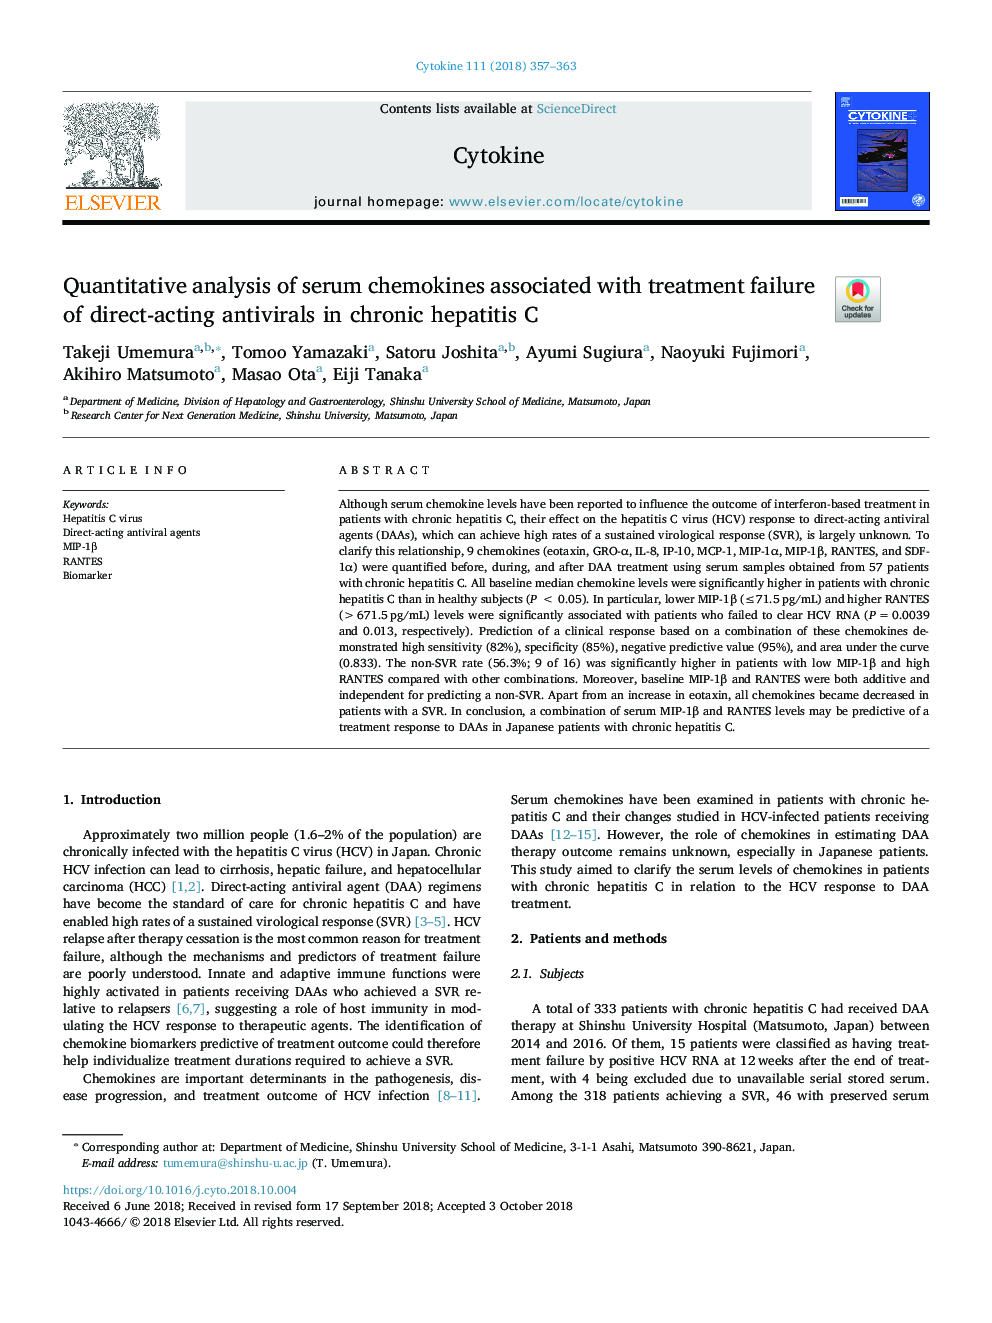 Quantitative analysis of serum chemokines associated with treatment failure of direct-acting antivirals in chronic hepatitis C